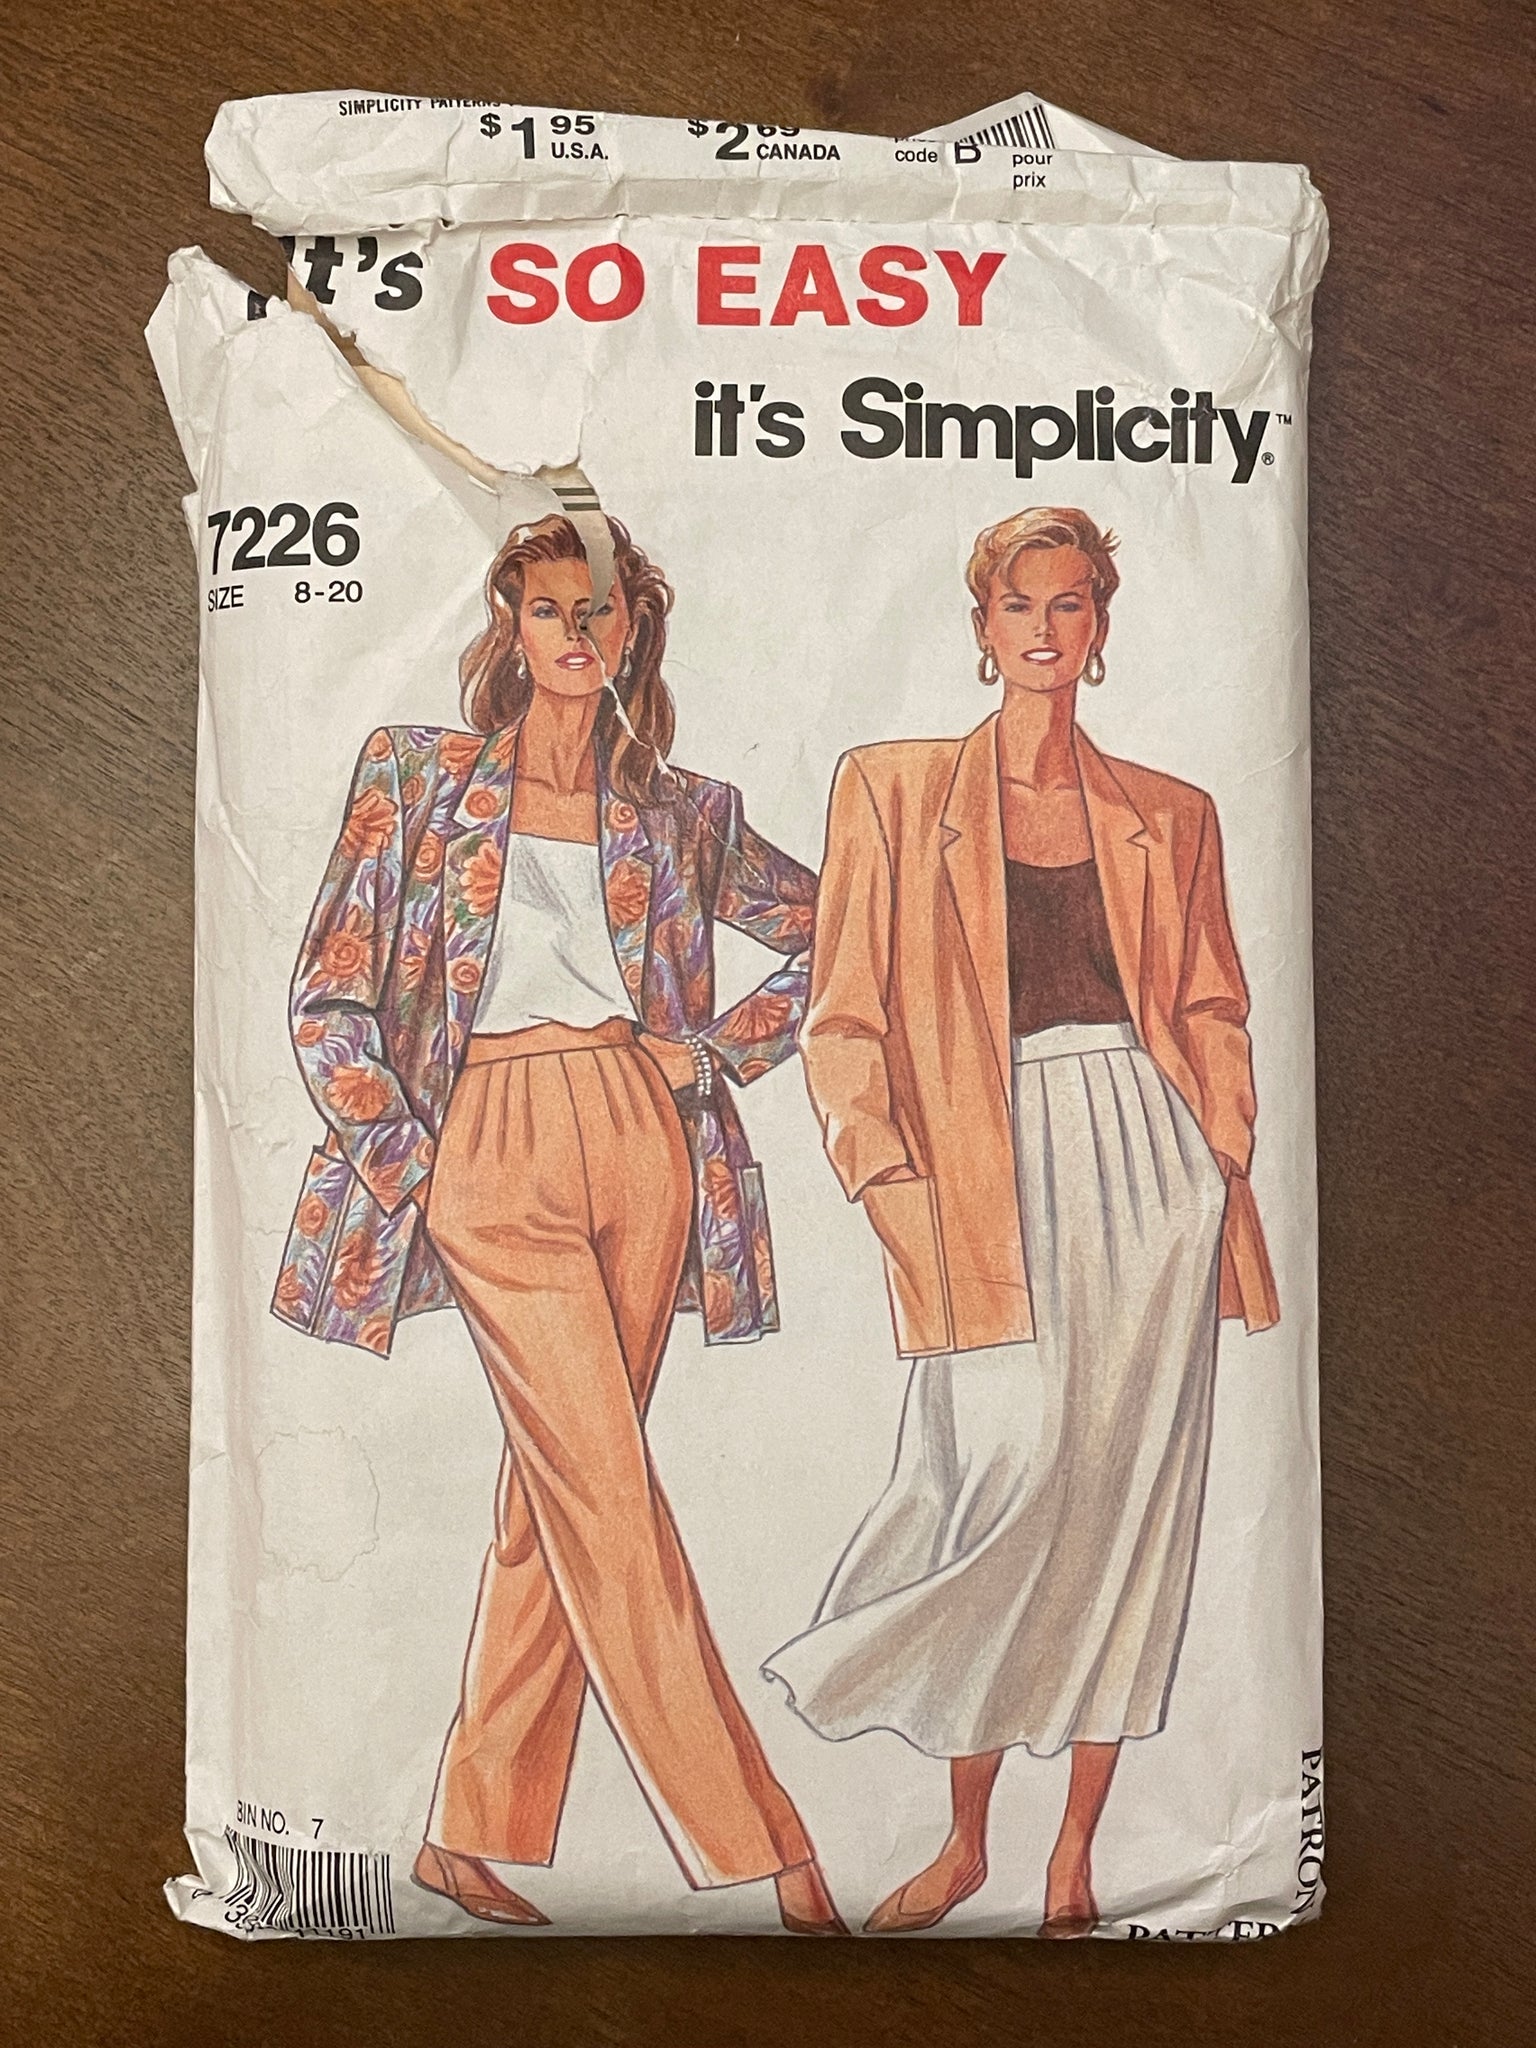 1991 Simplicity 7226 Pattern - Women's Jacket, Skirt and Pants